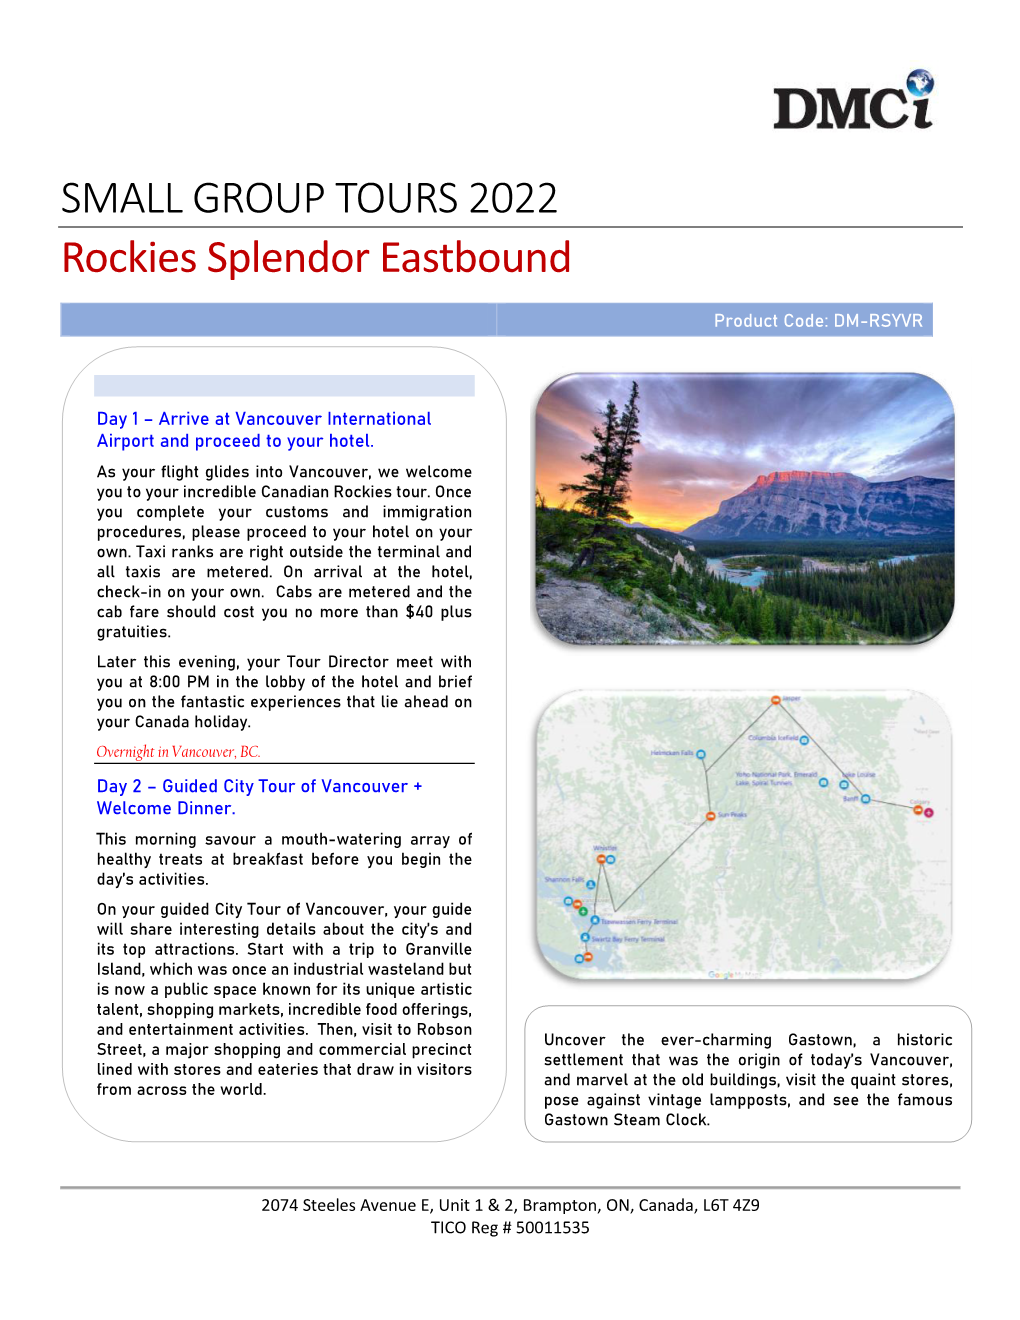 SMALL GROUP TOURS 2022 Rockies Splendor Eastbound